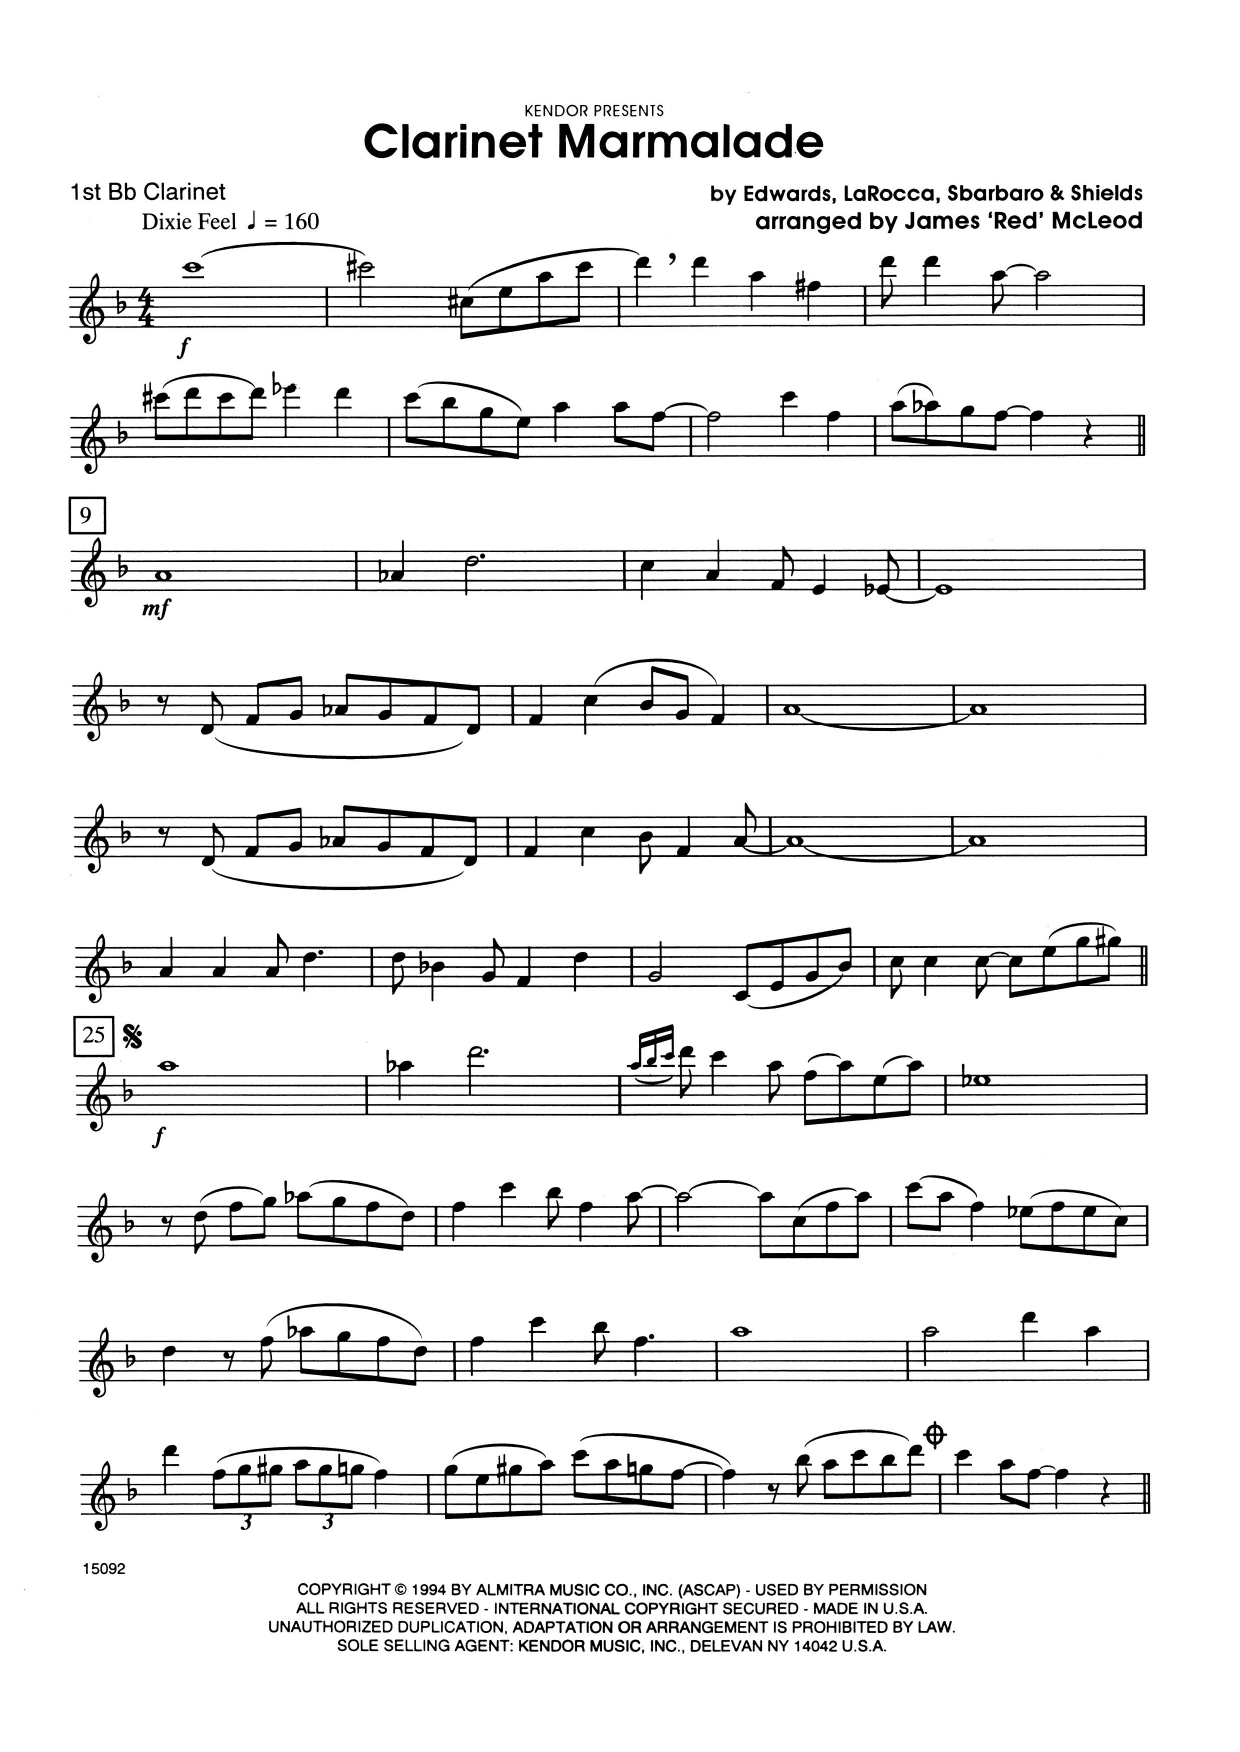 Download James 'Red' McLoud Clarinet Marmalade - 1st Bb Clarinet Sheet Music